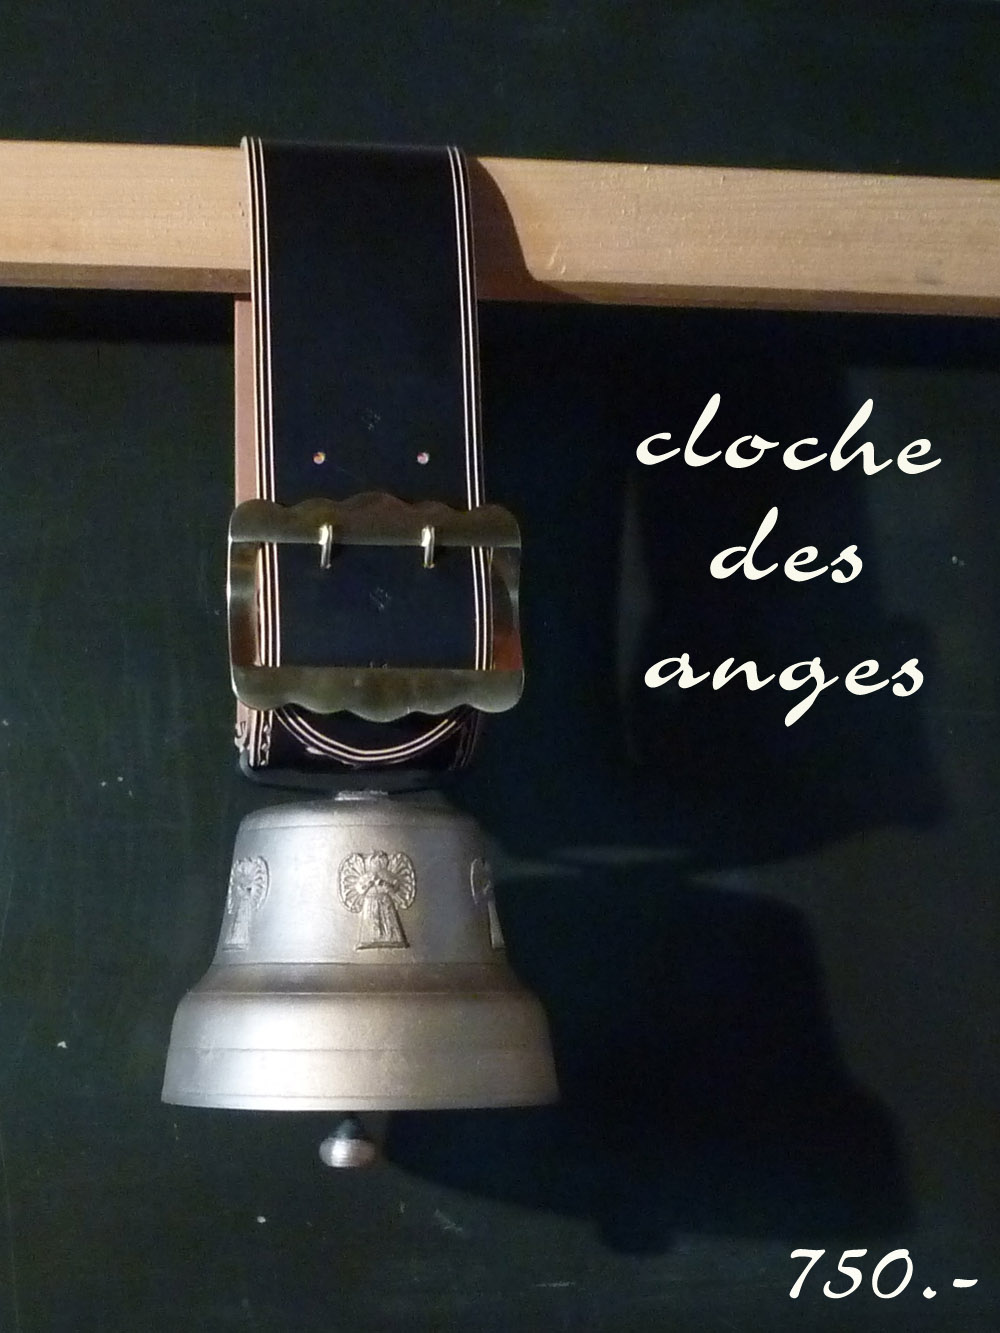 gal/Cloches courantes - More common bells - Gebrauchsglocken/cloche des anges.jpg